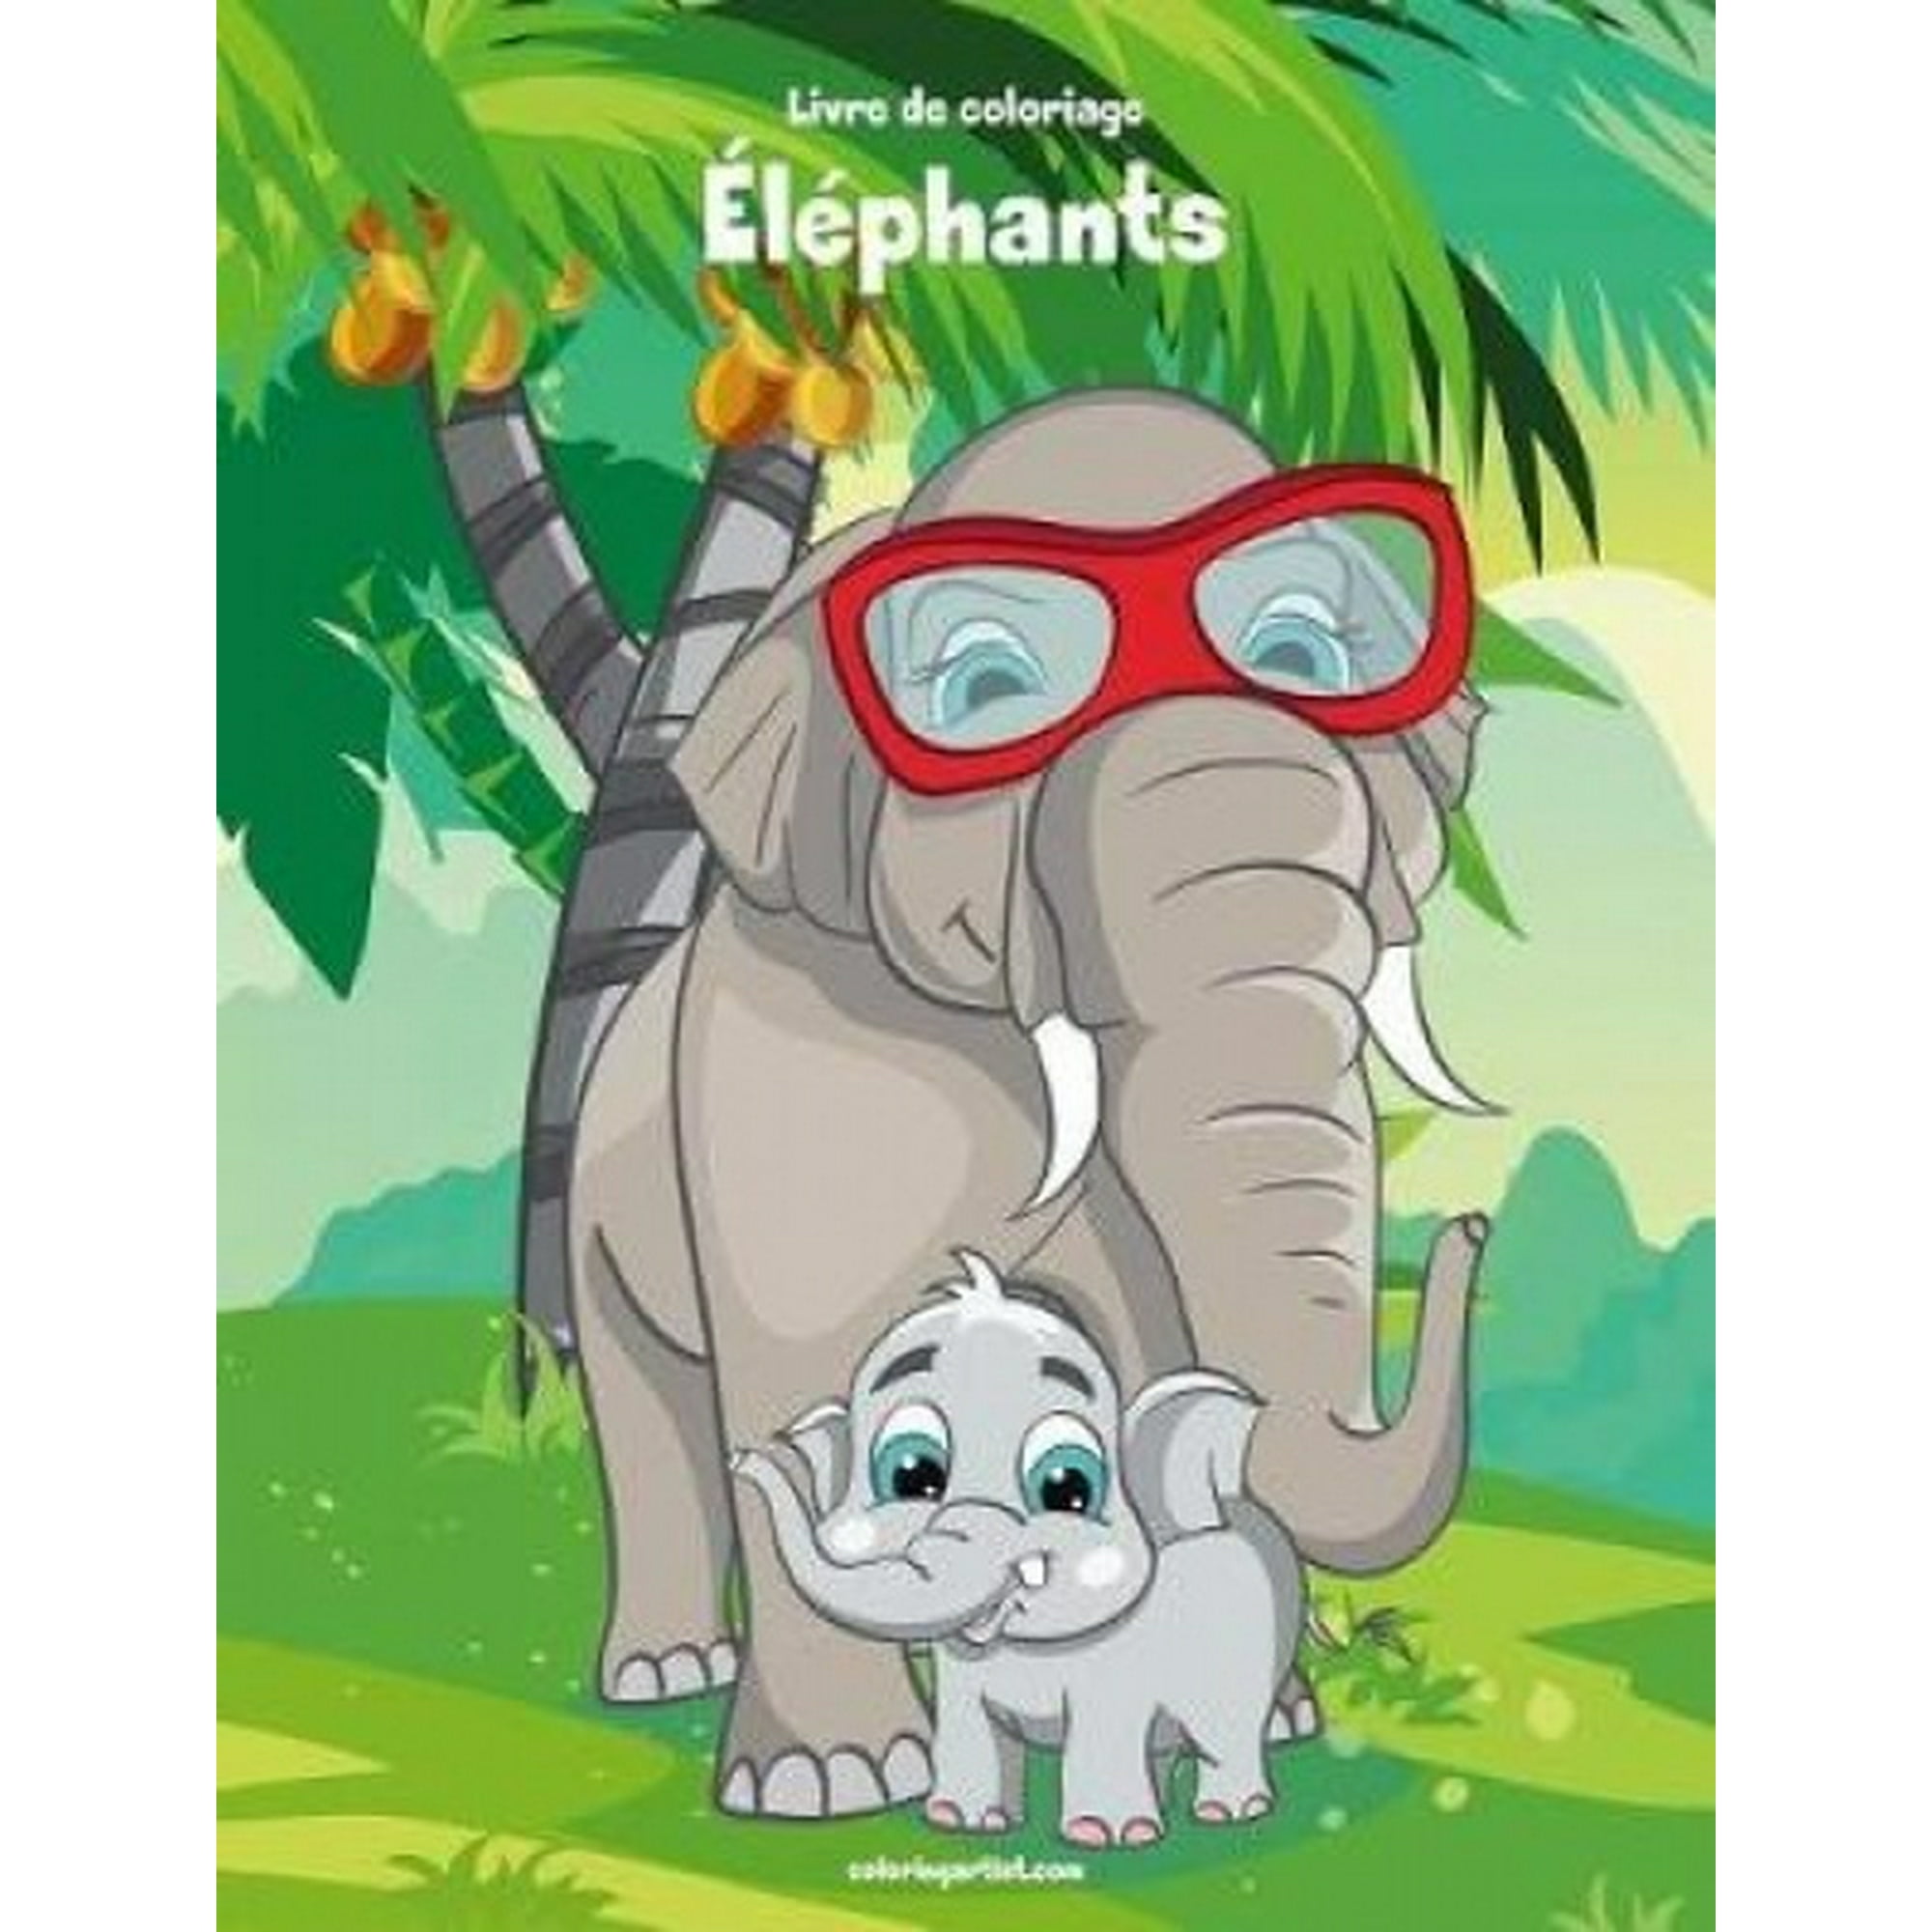 Livre de coloriage Elephants 1 & 2 (Elephants) [French] | Walmart Canada